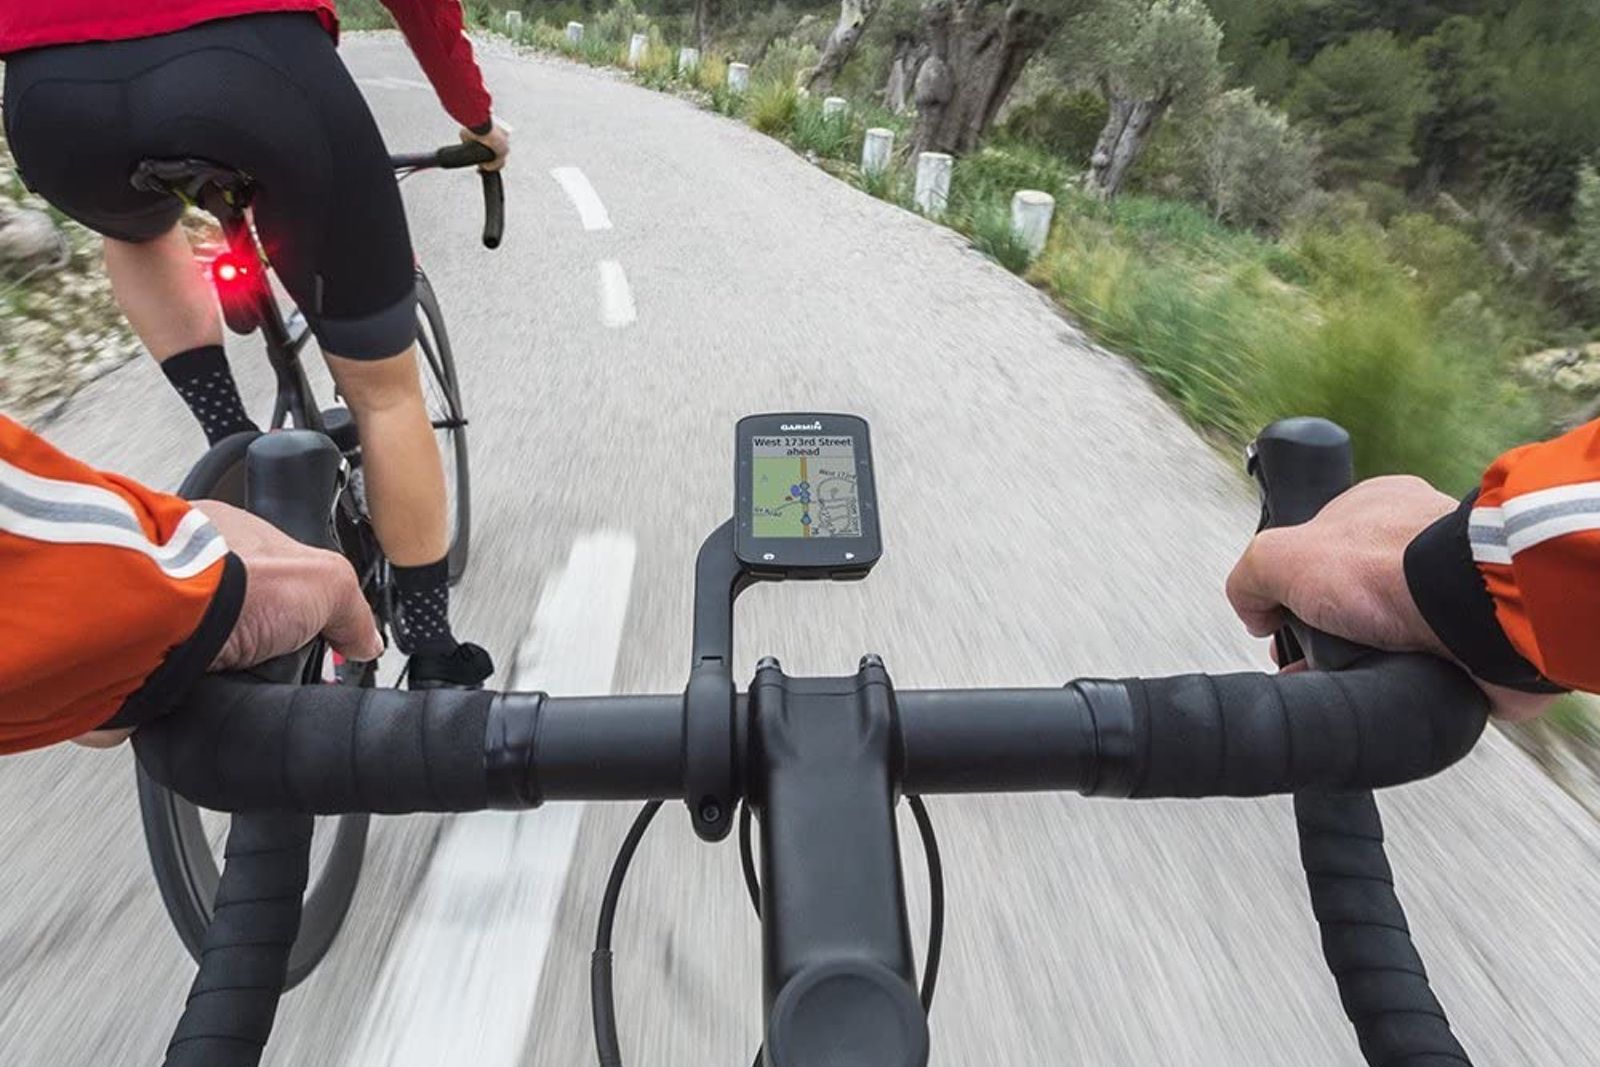 Mejores ciclocomputadores GPS para la bicicleta - Blog de PcComponentes